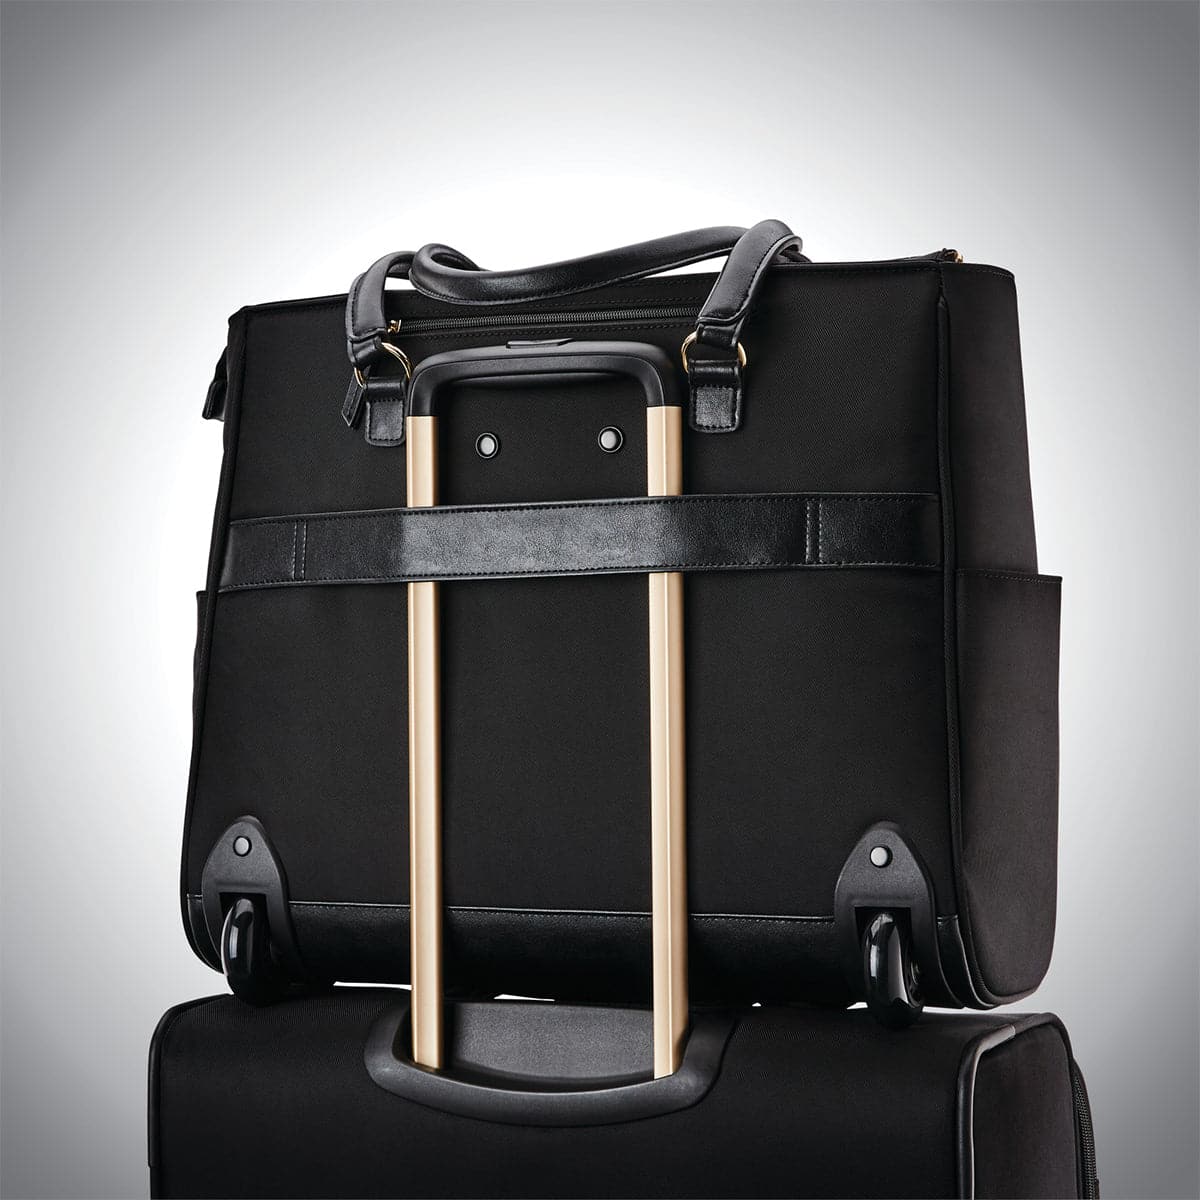 Samsonite Mobile Solution Upright Wheeled Carryall Luggage